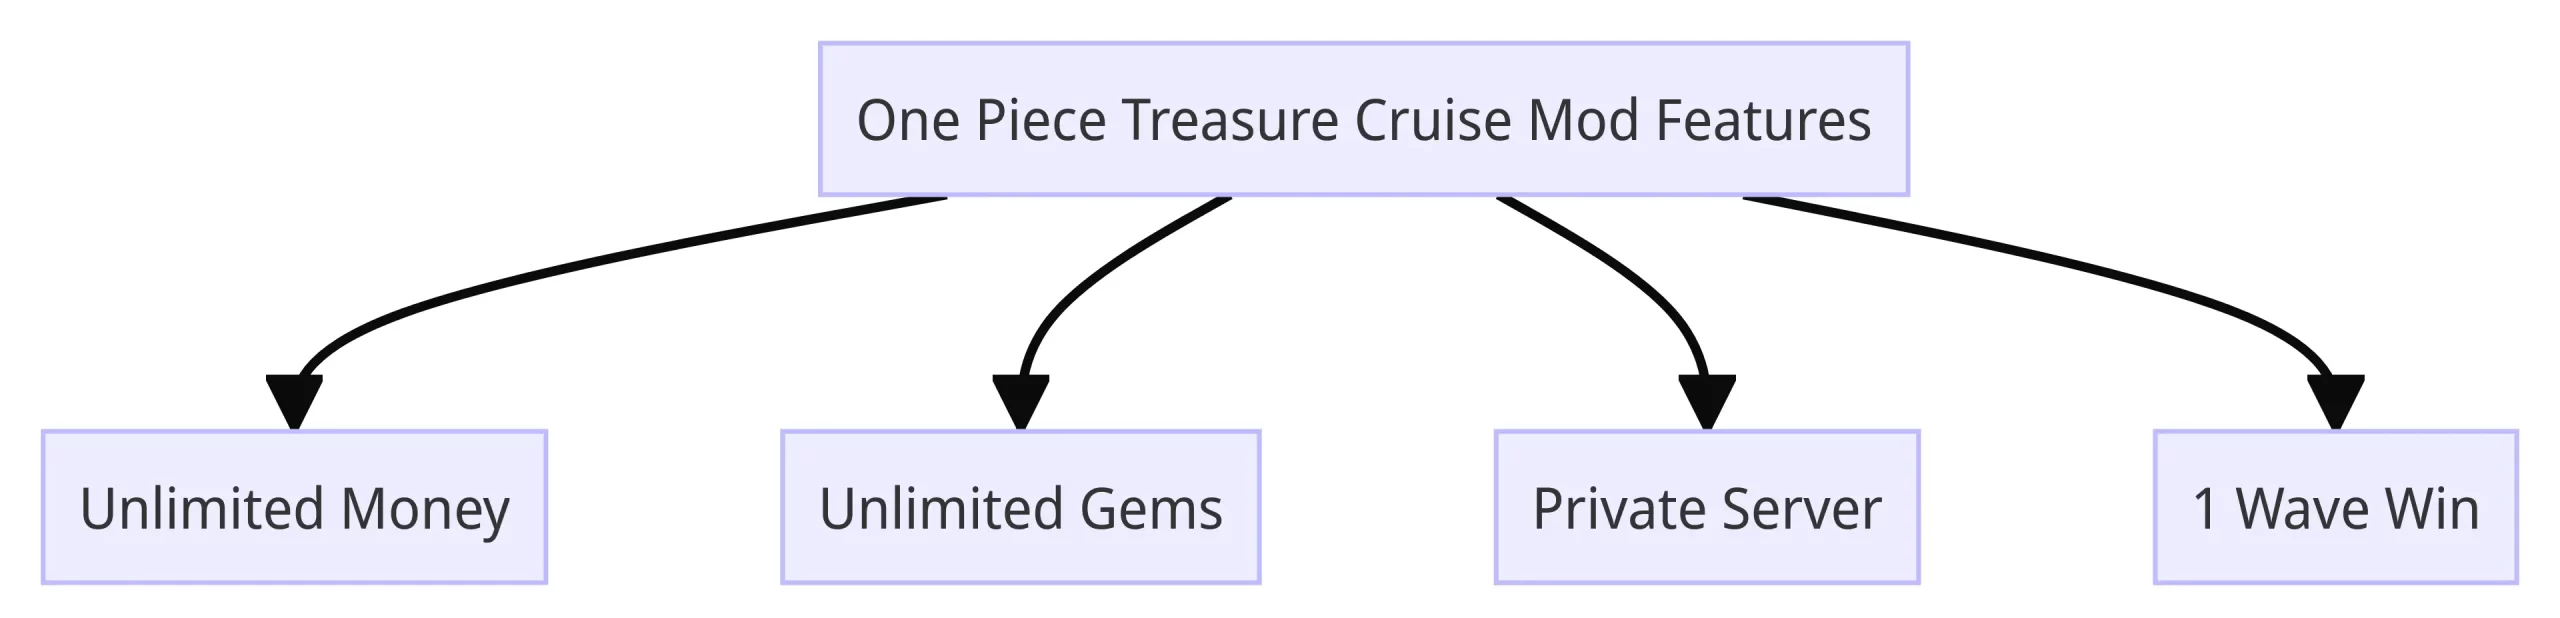 One Piece Treasure Cruise Mod Features